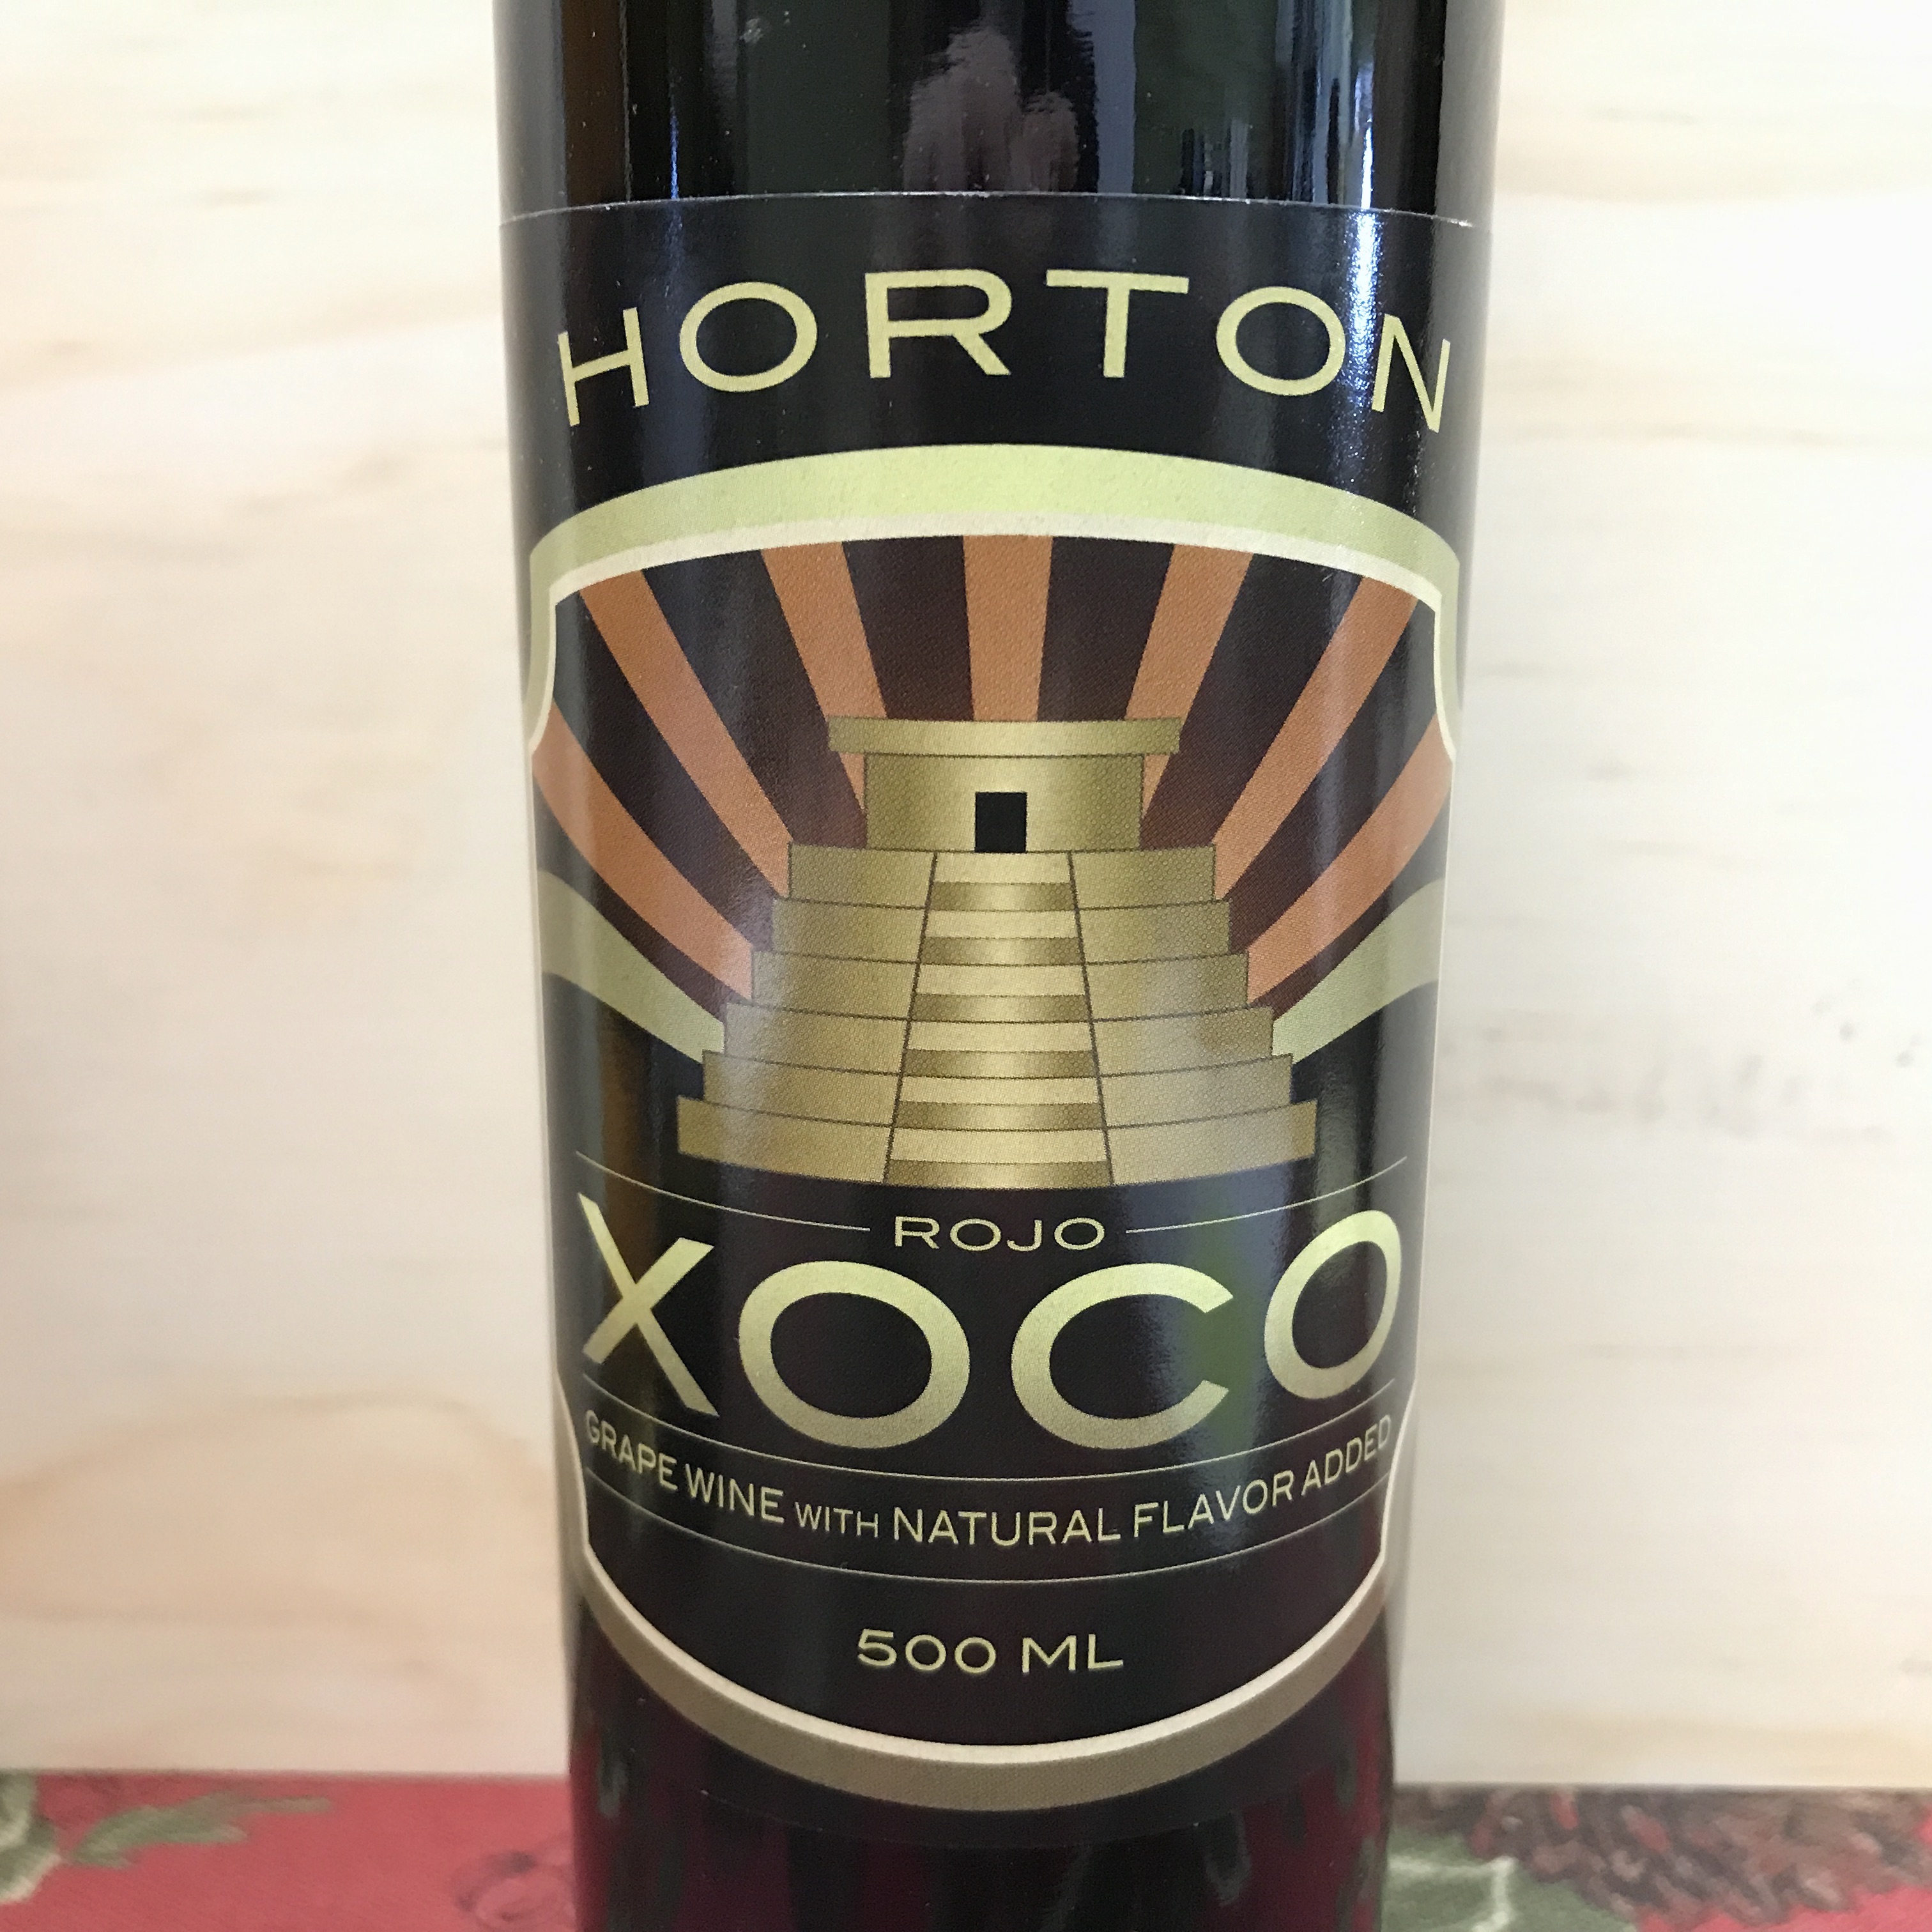 Horton Vineyards Xoco Rojo desert red